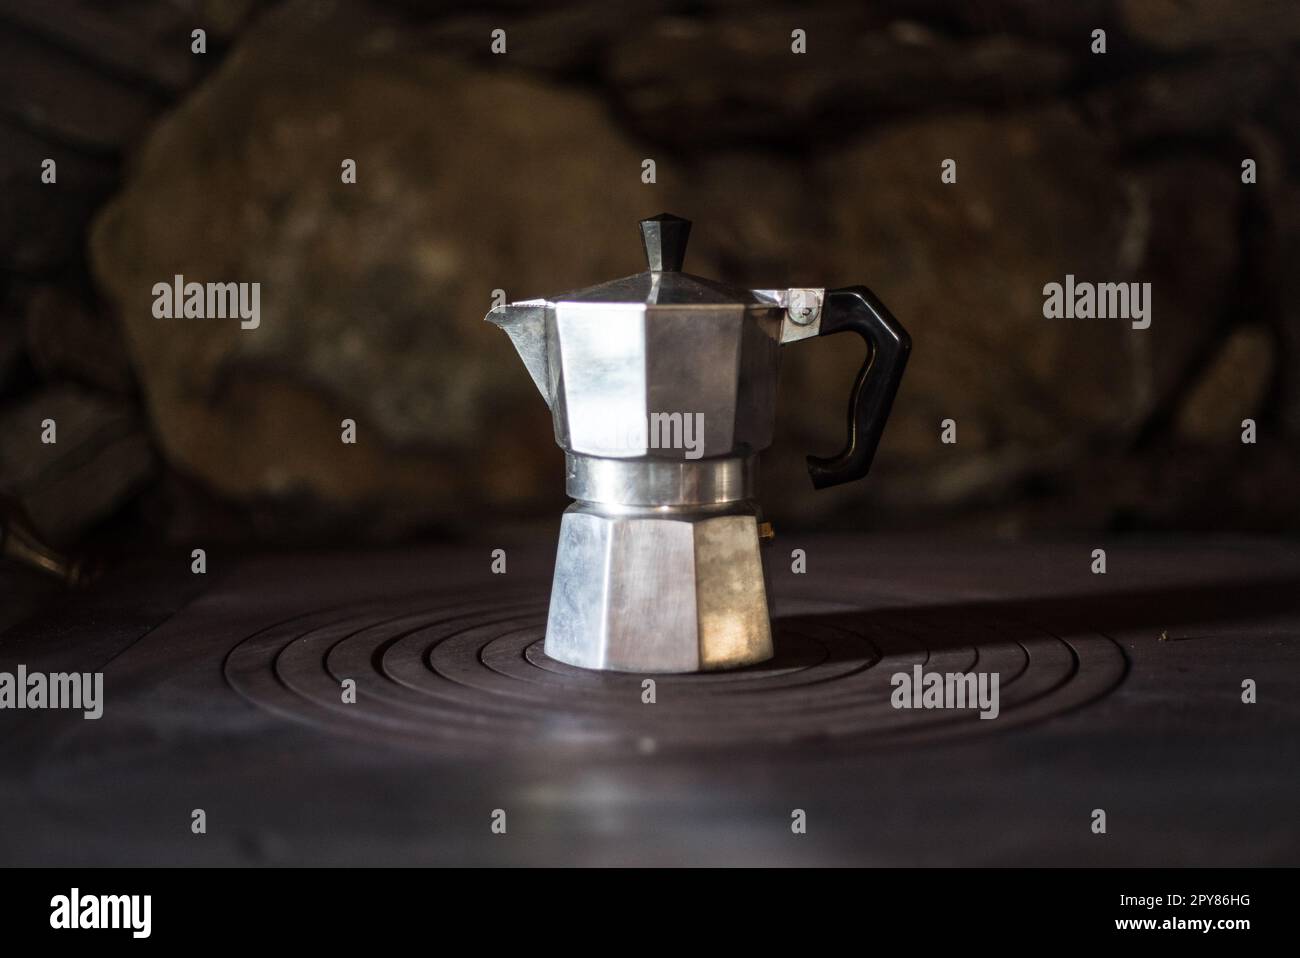 https://c8.alamy.com/comp/2PY86HG/close-up-of-an-italian-coffee-machine-on-an-old-stove-2PY86HG.jpg